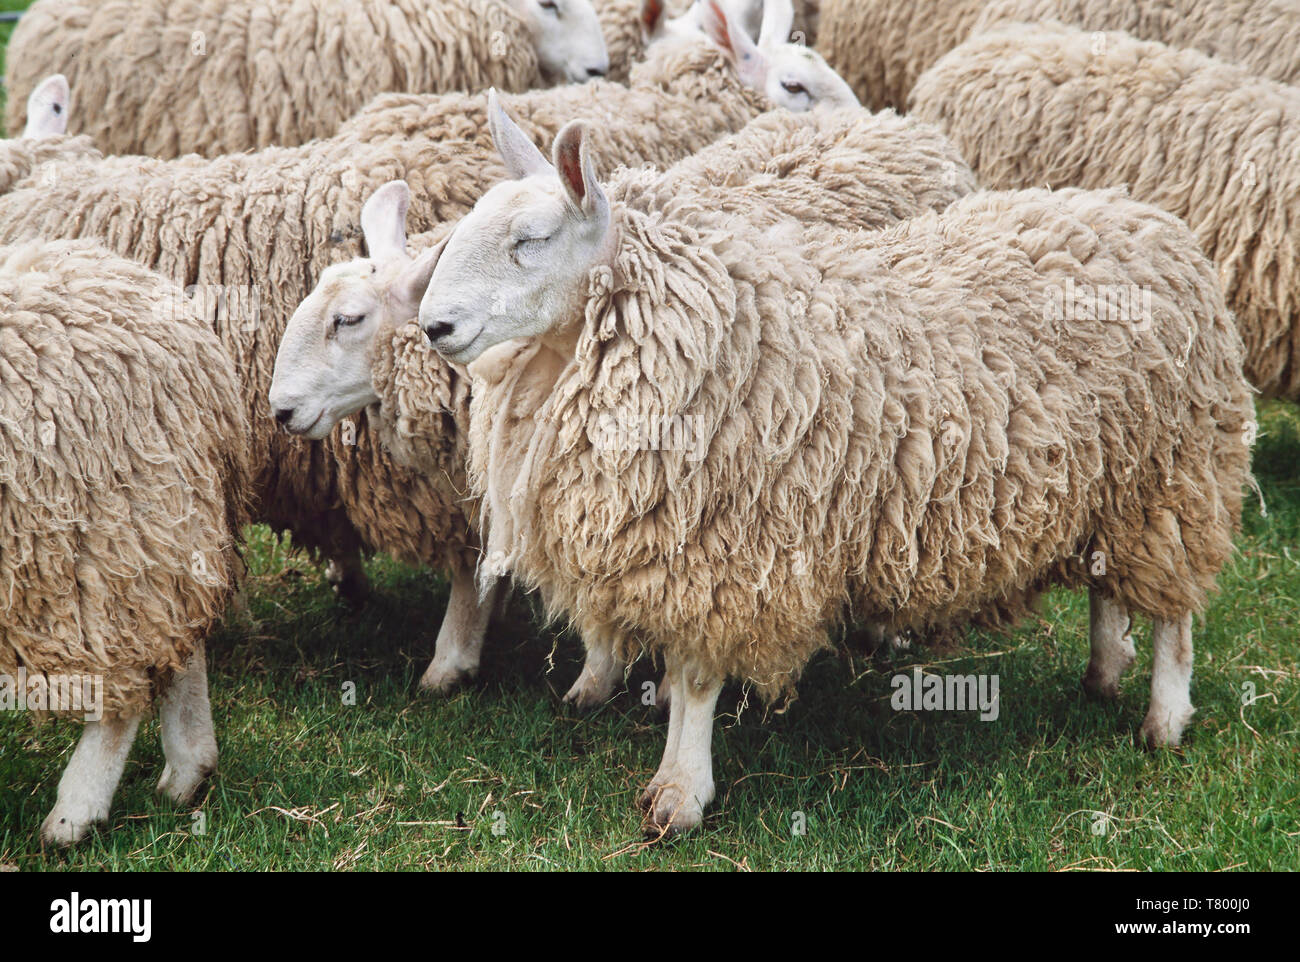 Cheviot sheep, Ovis aries, thick coat before shearing, Stock Photo